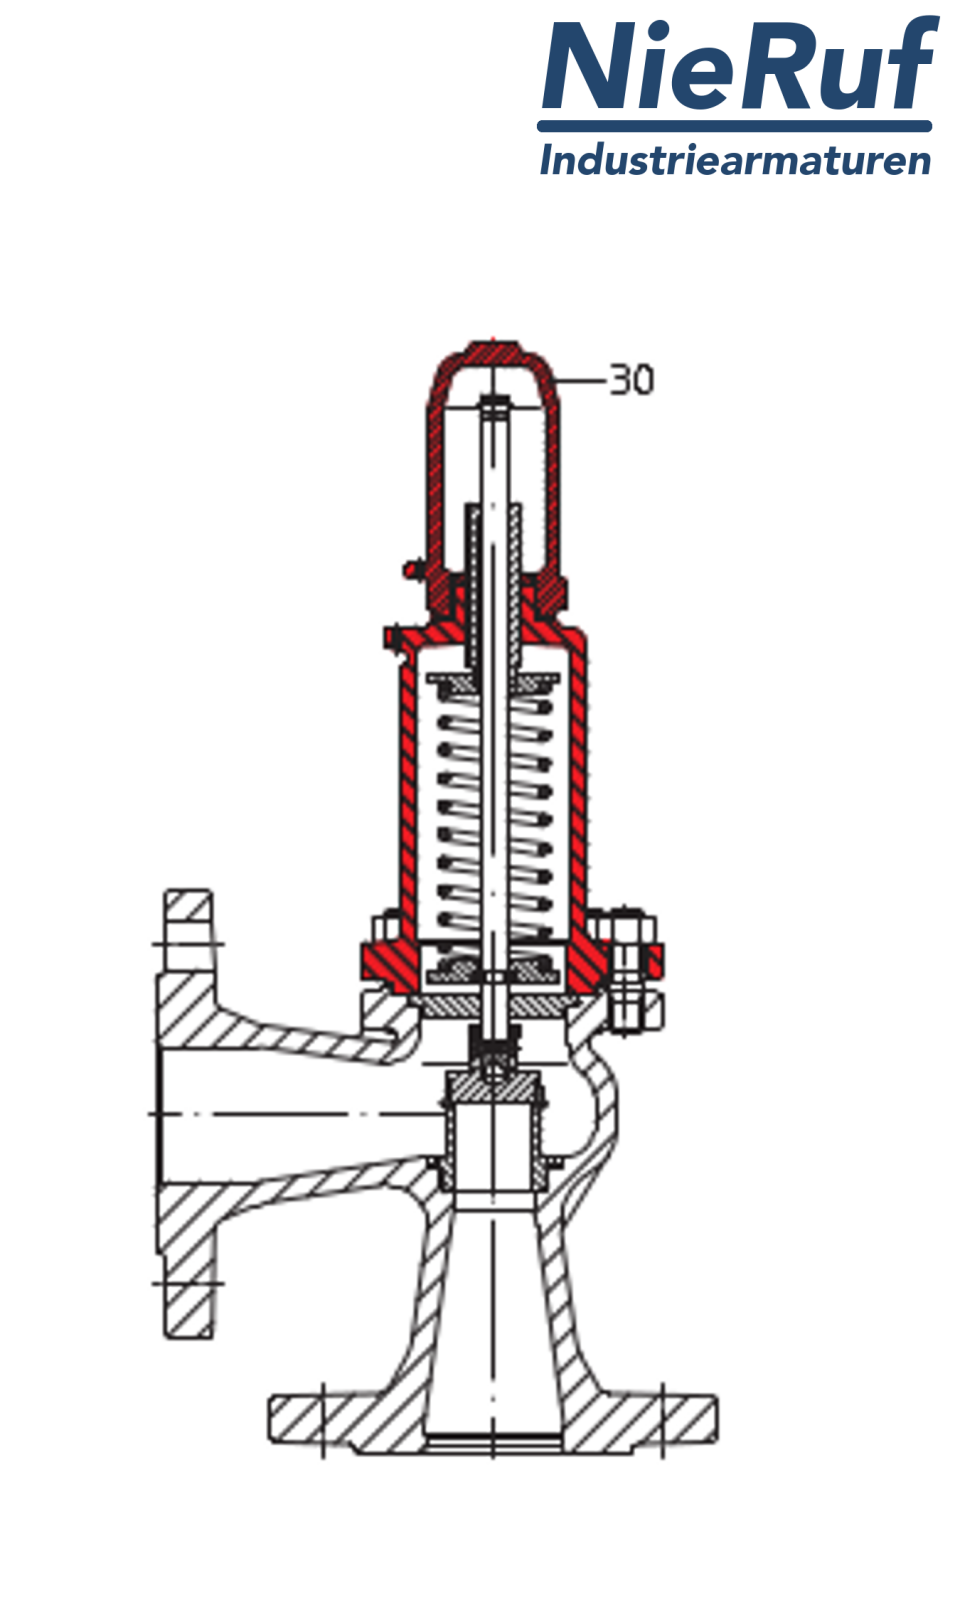 flange-safety valve DN32/DN32 SF0101, cast iron EN-JL1040 FPM, without lever